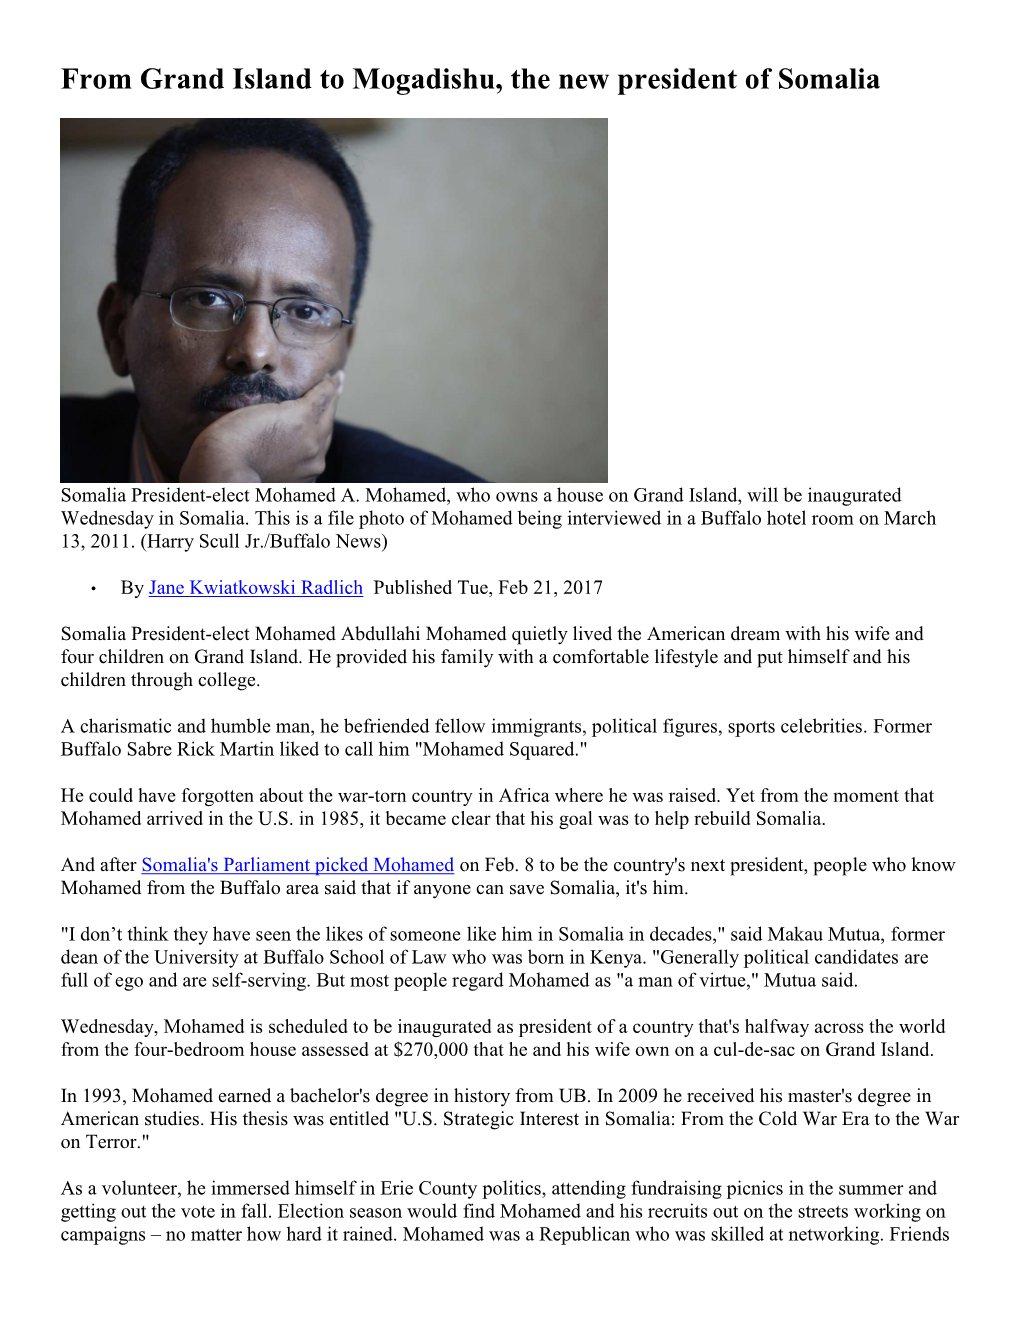 From Grand Island to Mogadishu, the New President of Somalia